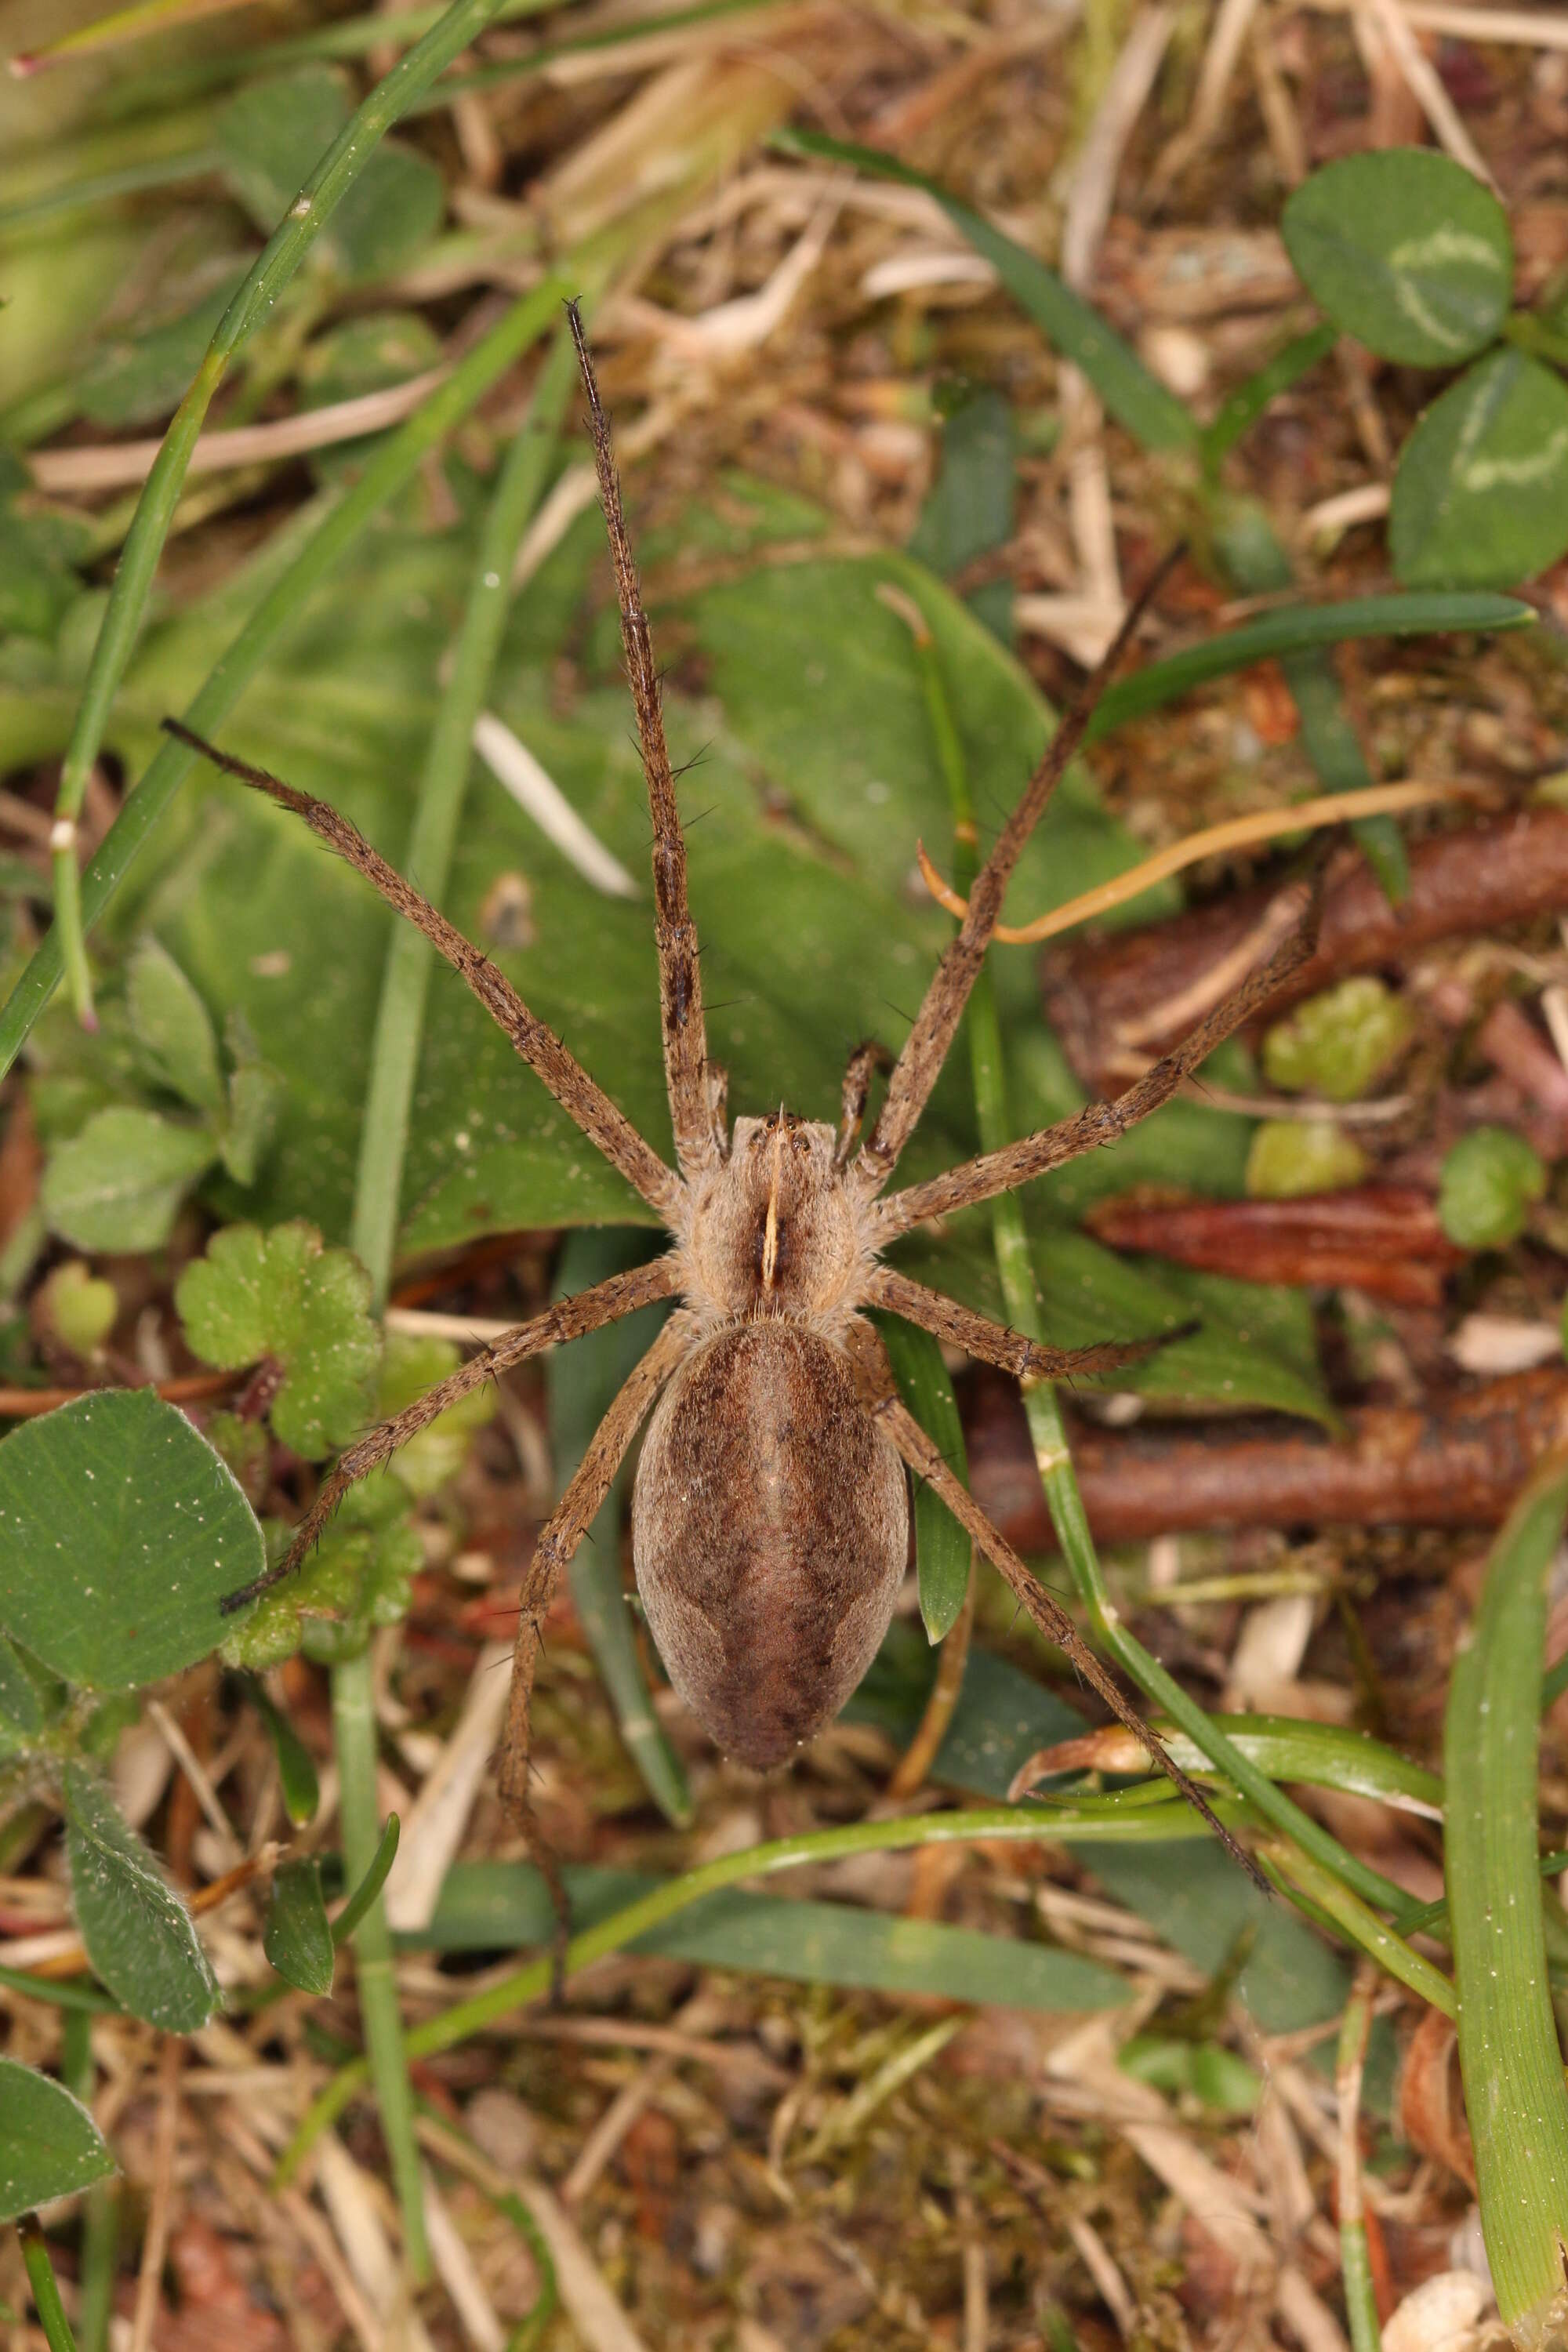 Image of Nursery-web spider